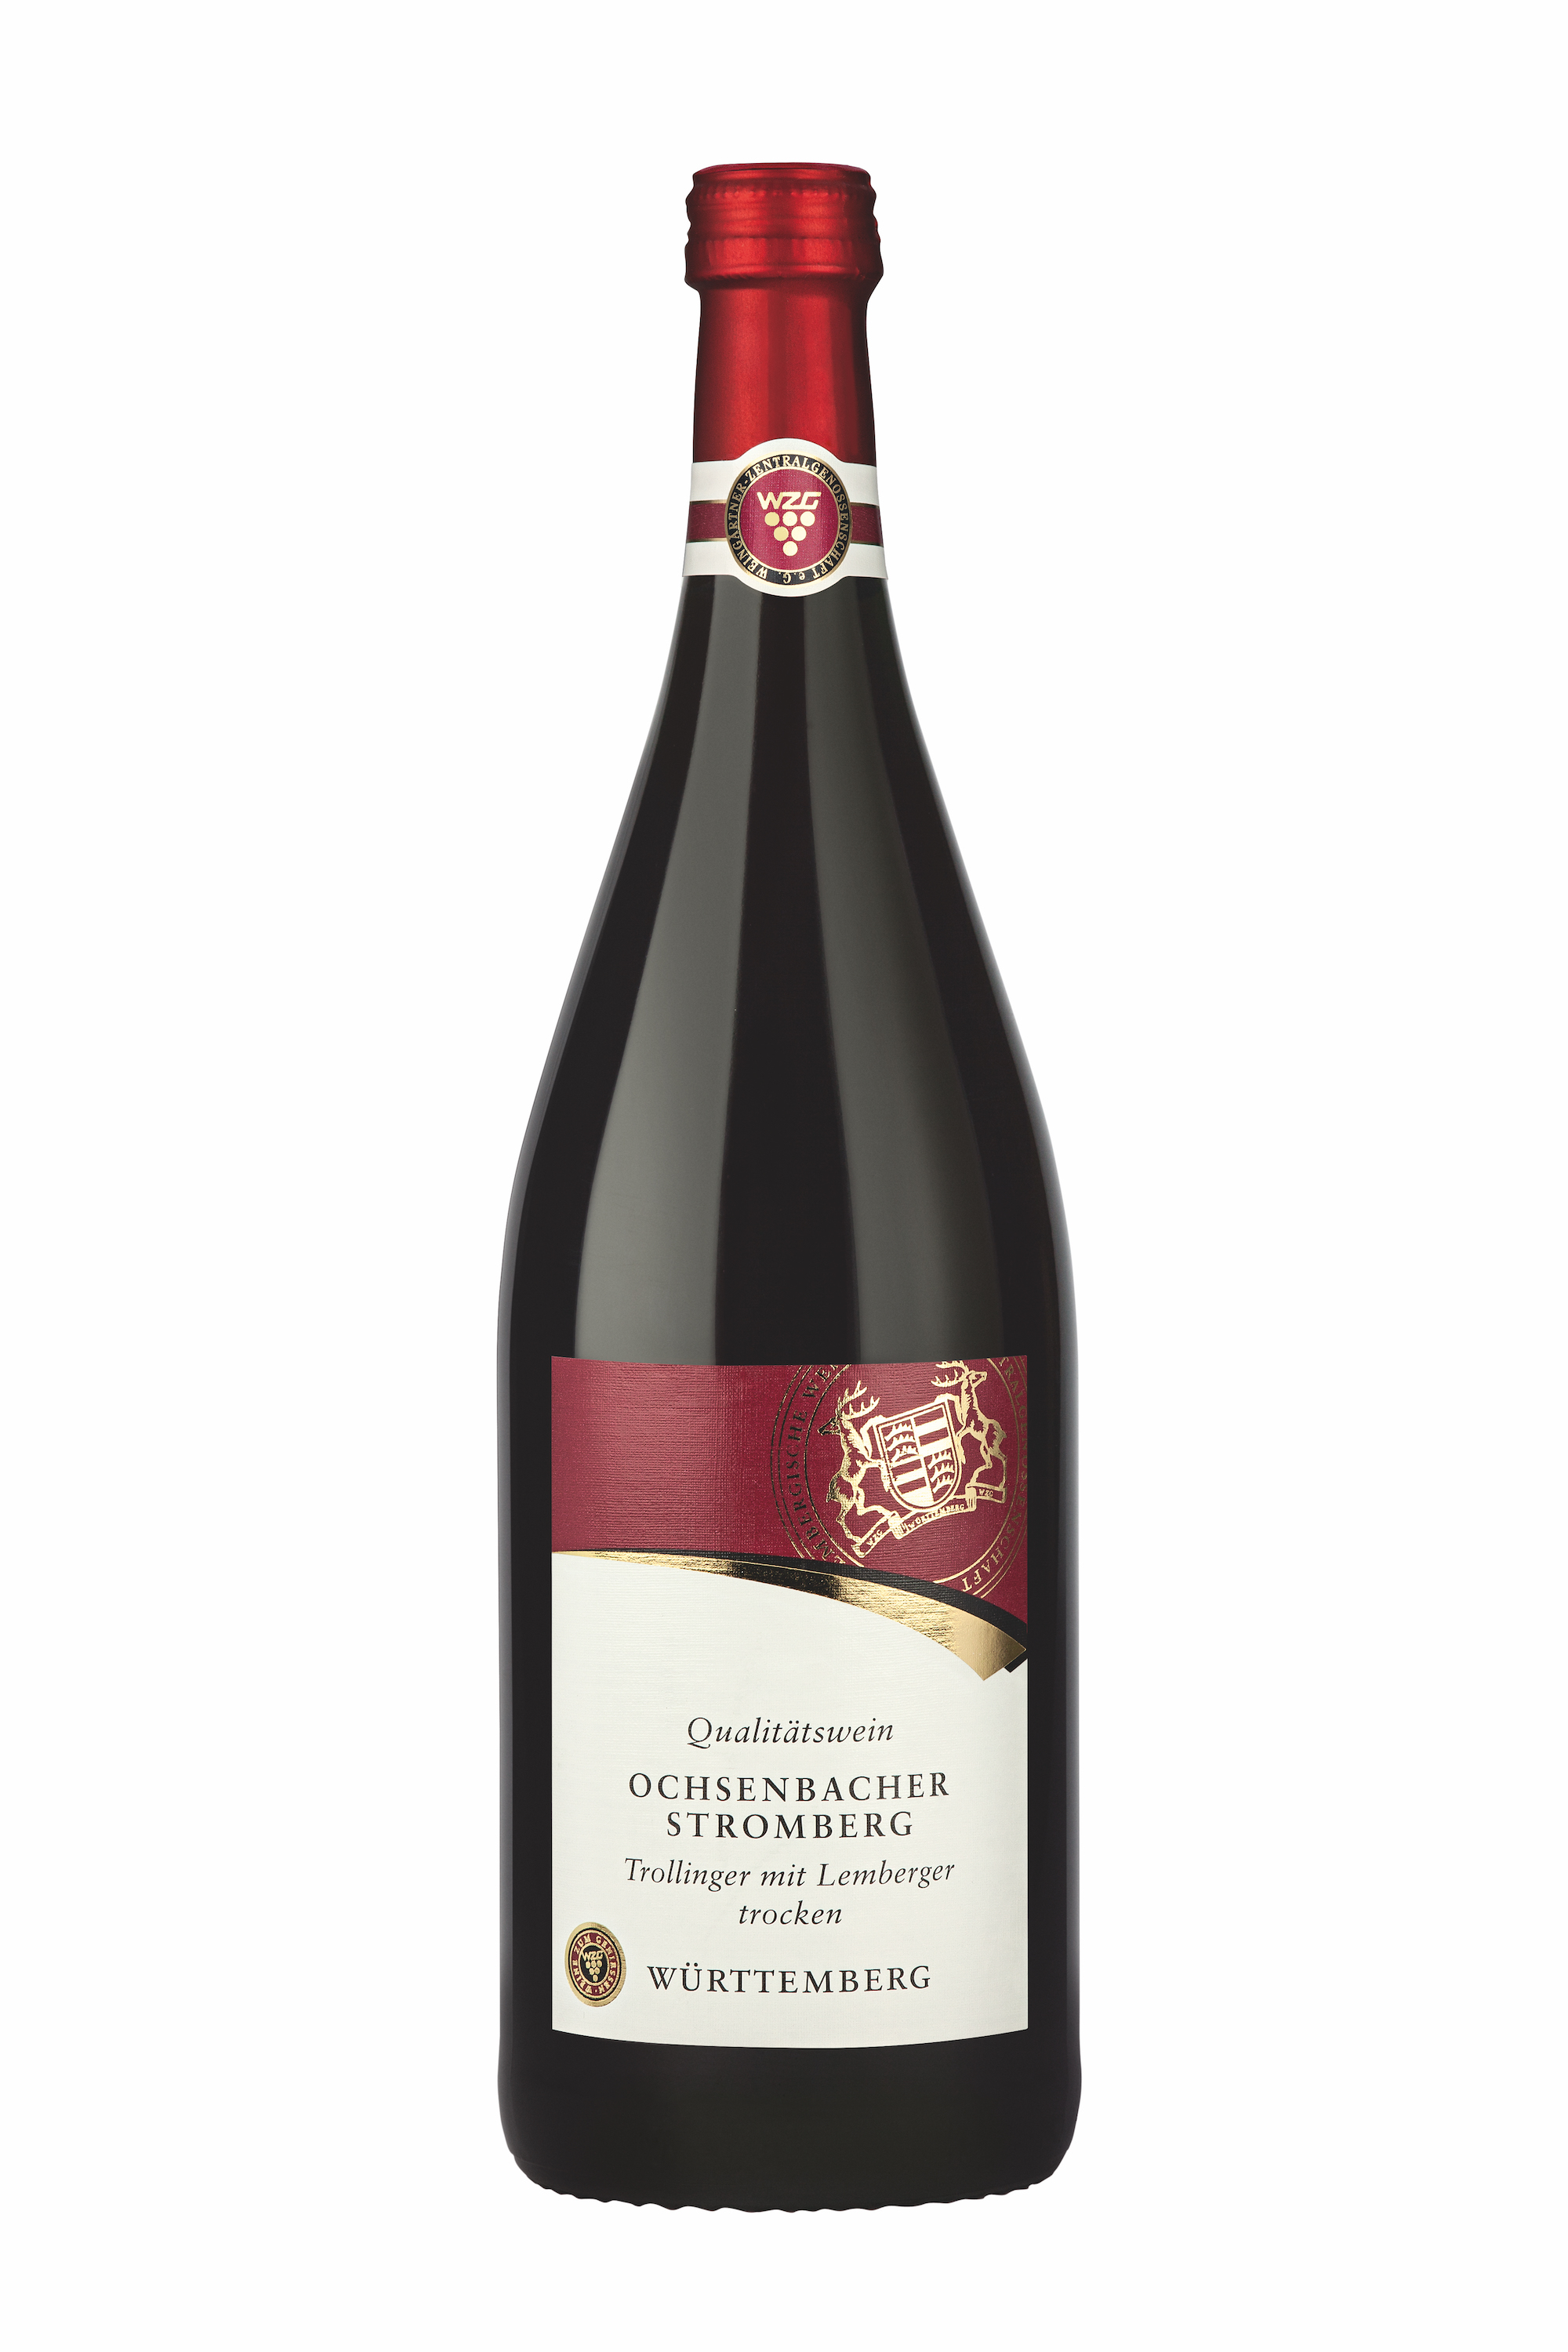 WZG Möglingen Ochsenbacher Stromberg Trollinger mit Lemberger trocken 1,0 L - Qualitätswein, Rotwein, Württemberg, Literflasche, 1-Liter